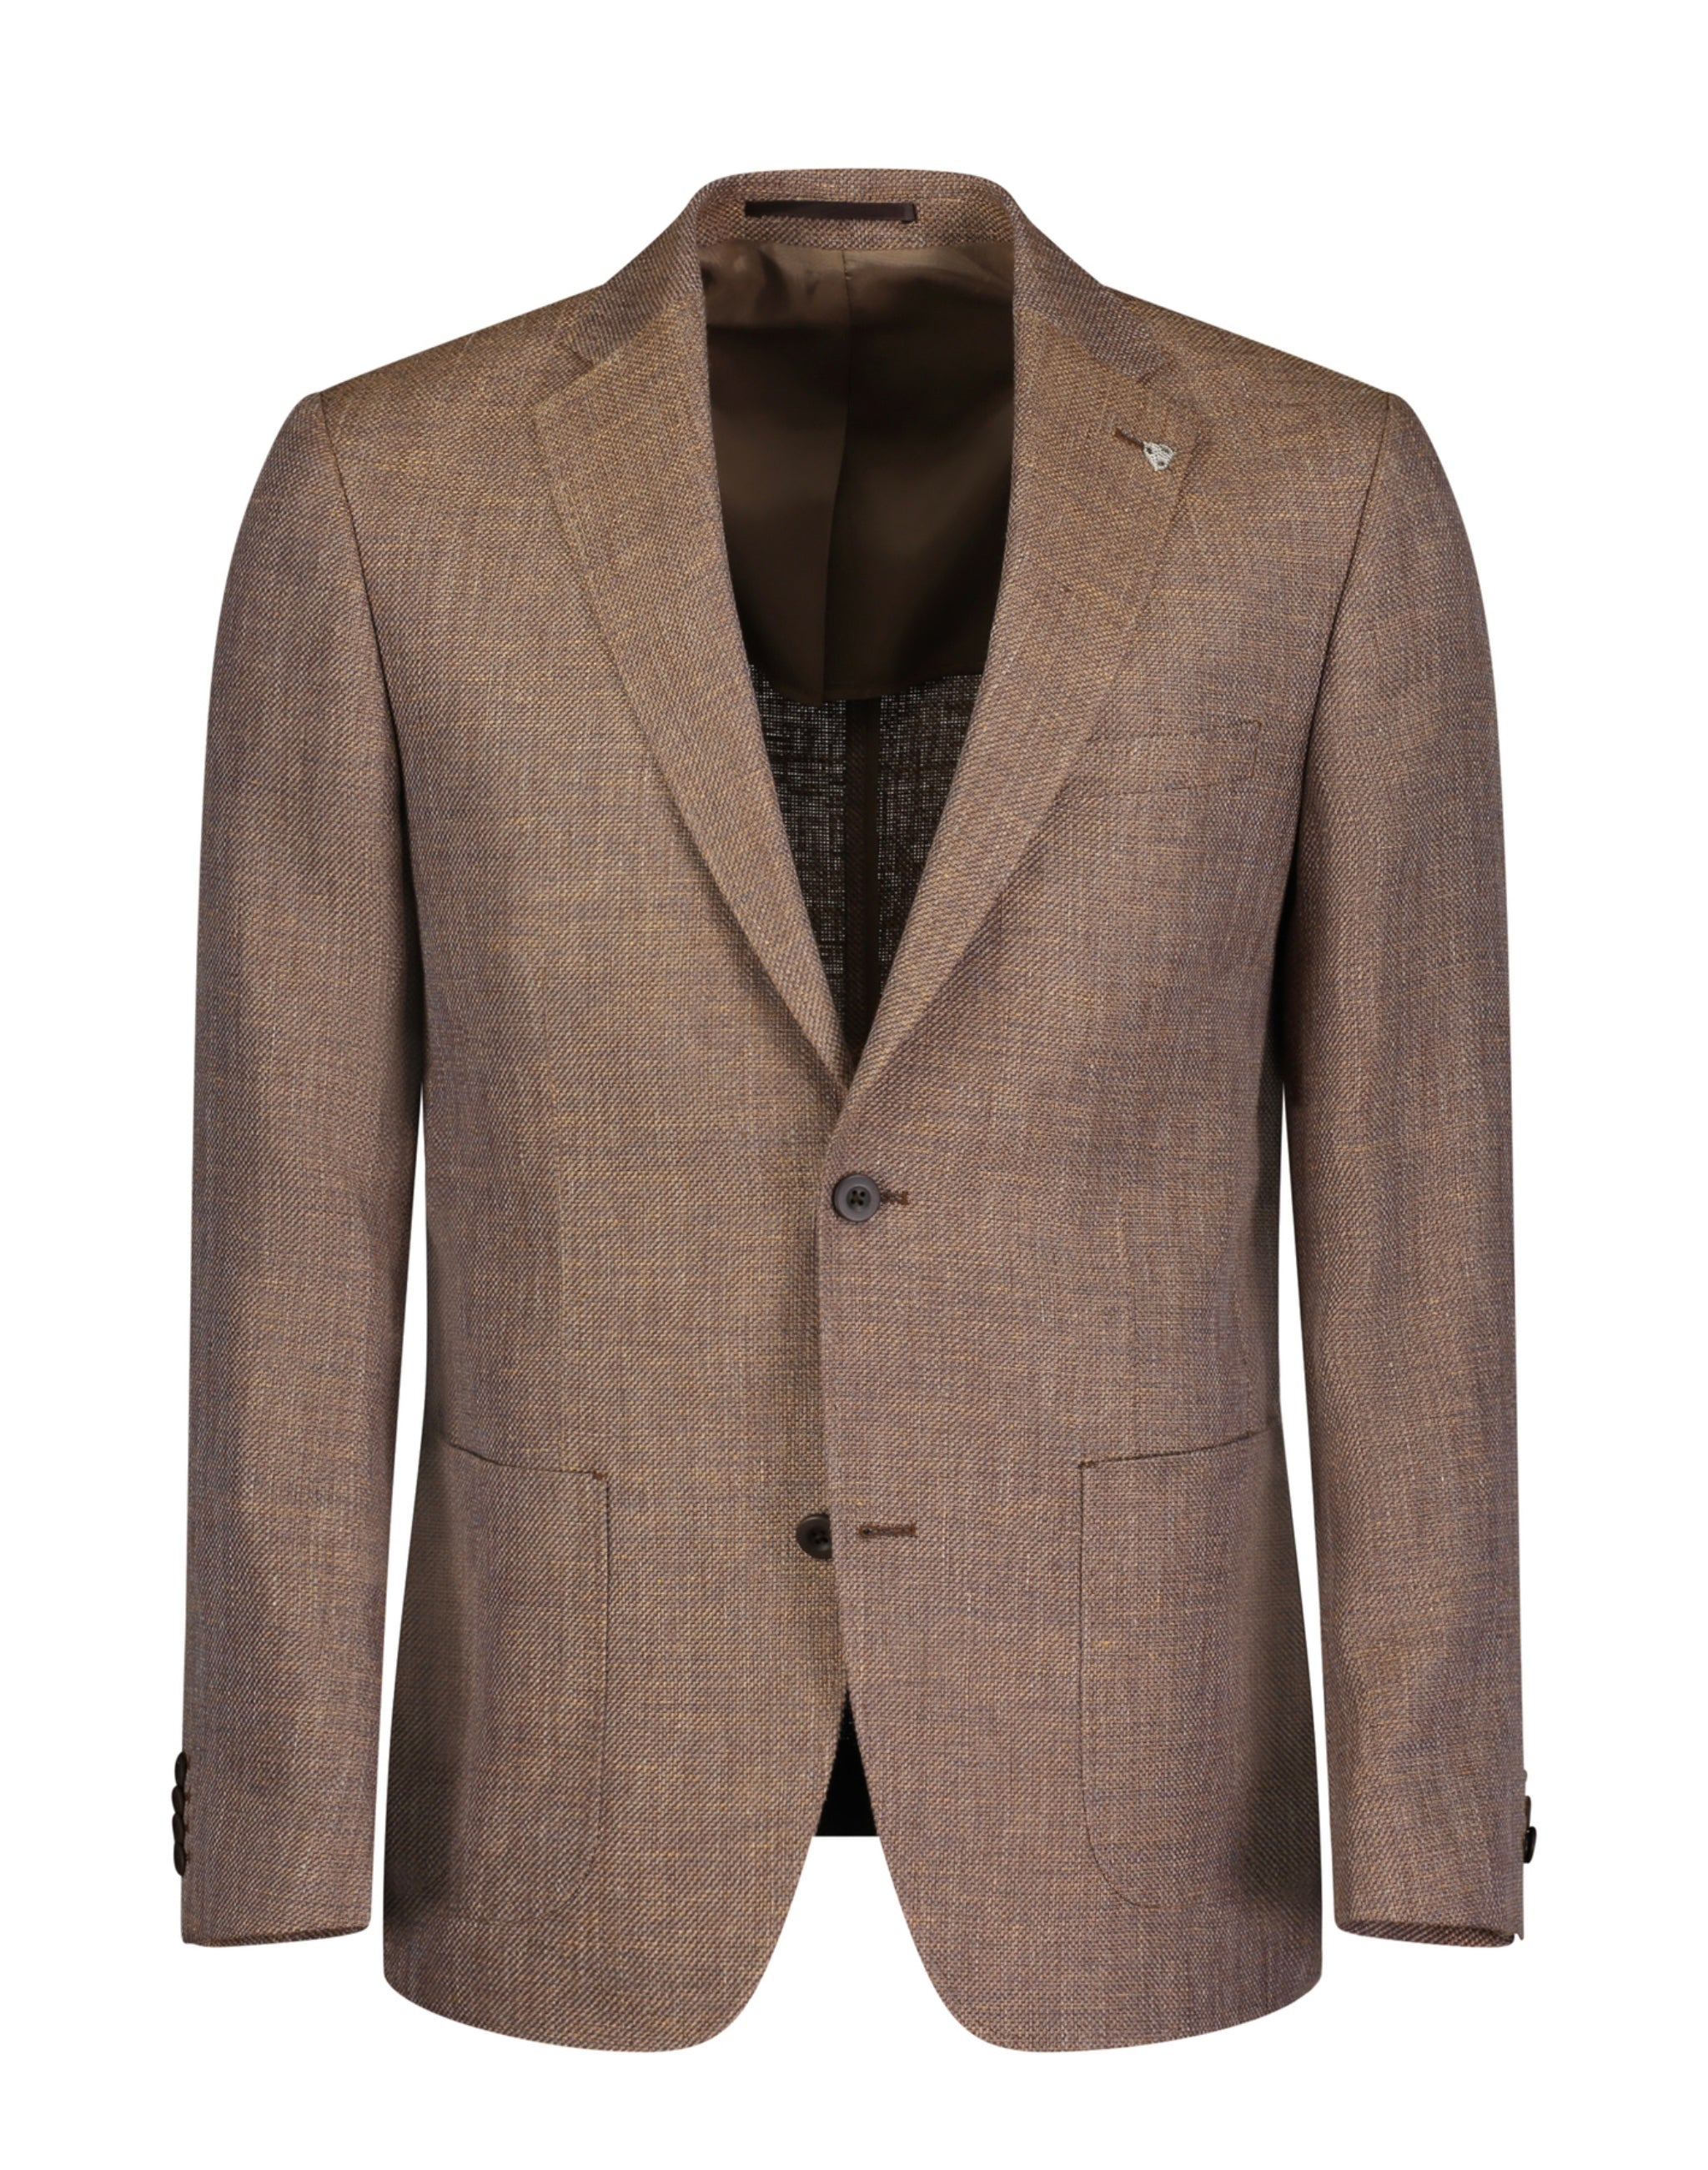 Roy Robson Premium Linen-Cotton Jacket in size 50 Short